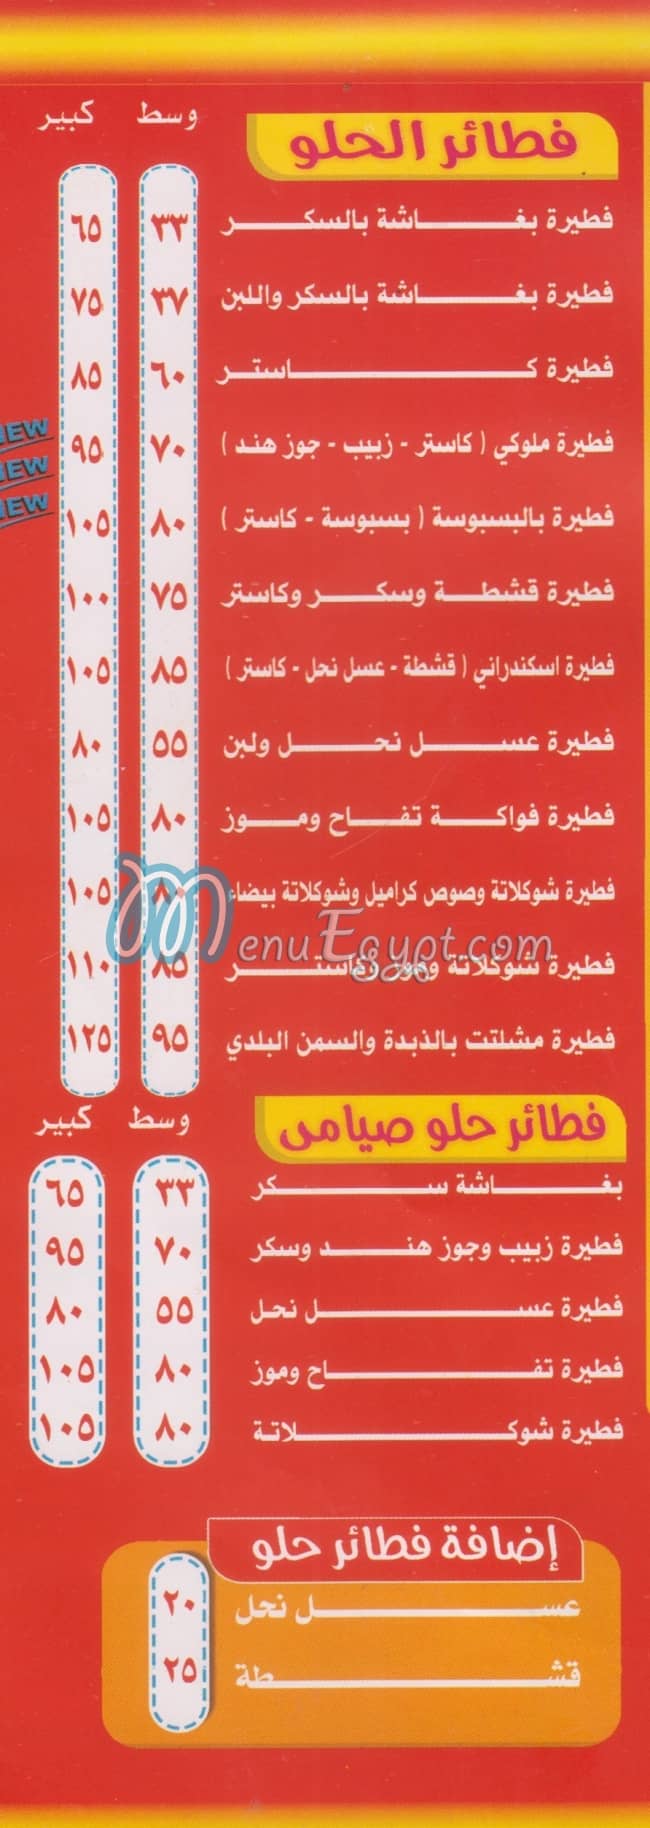 Koshary Hend menu Egypt 1